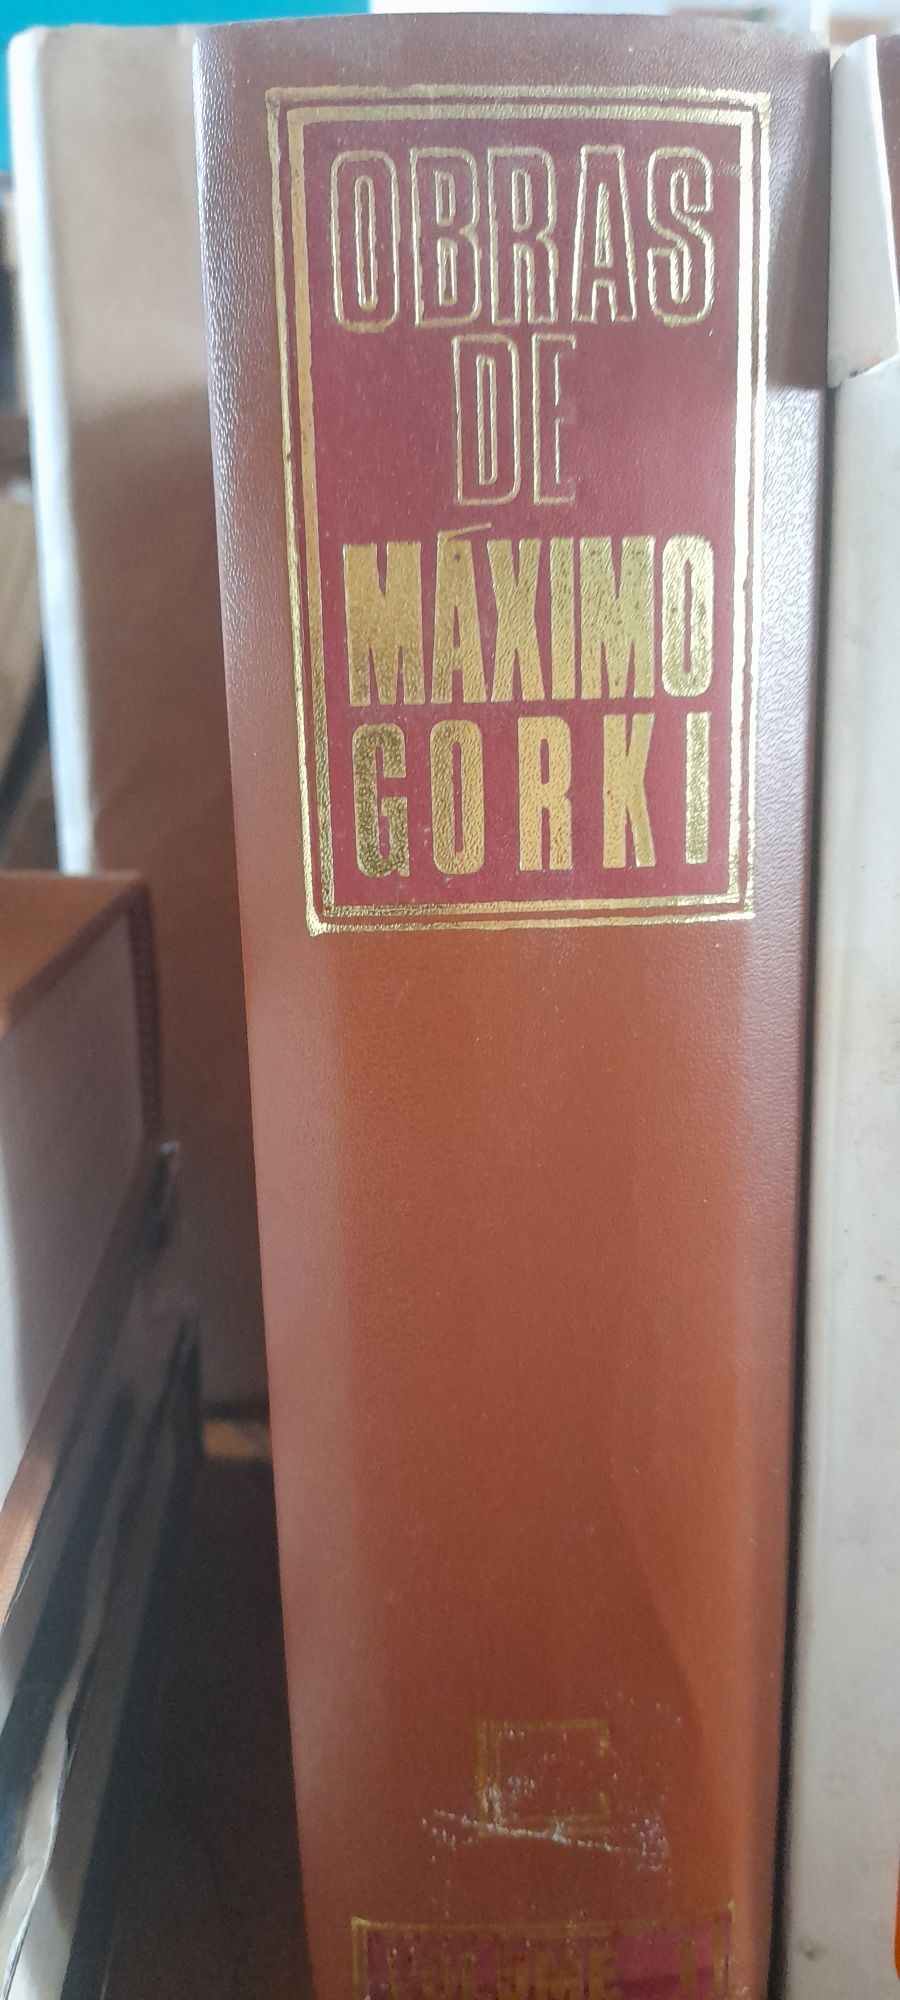 Obras de Máximo Gorki